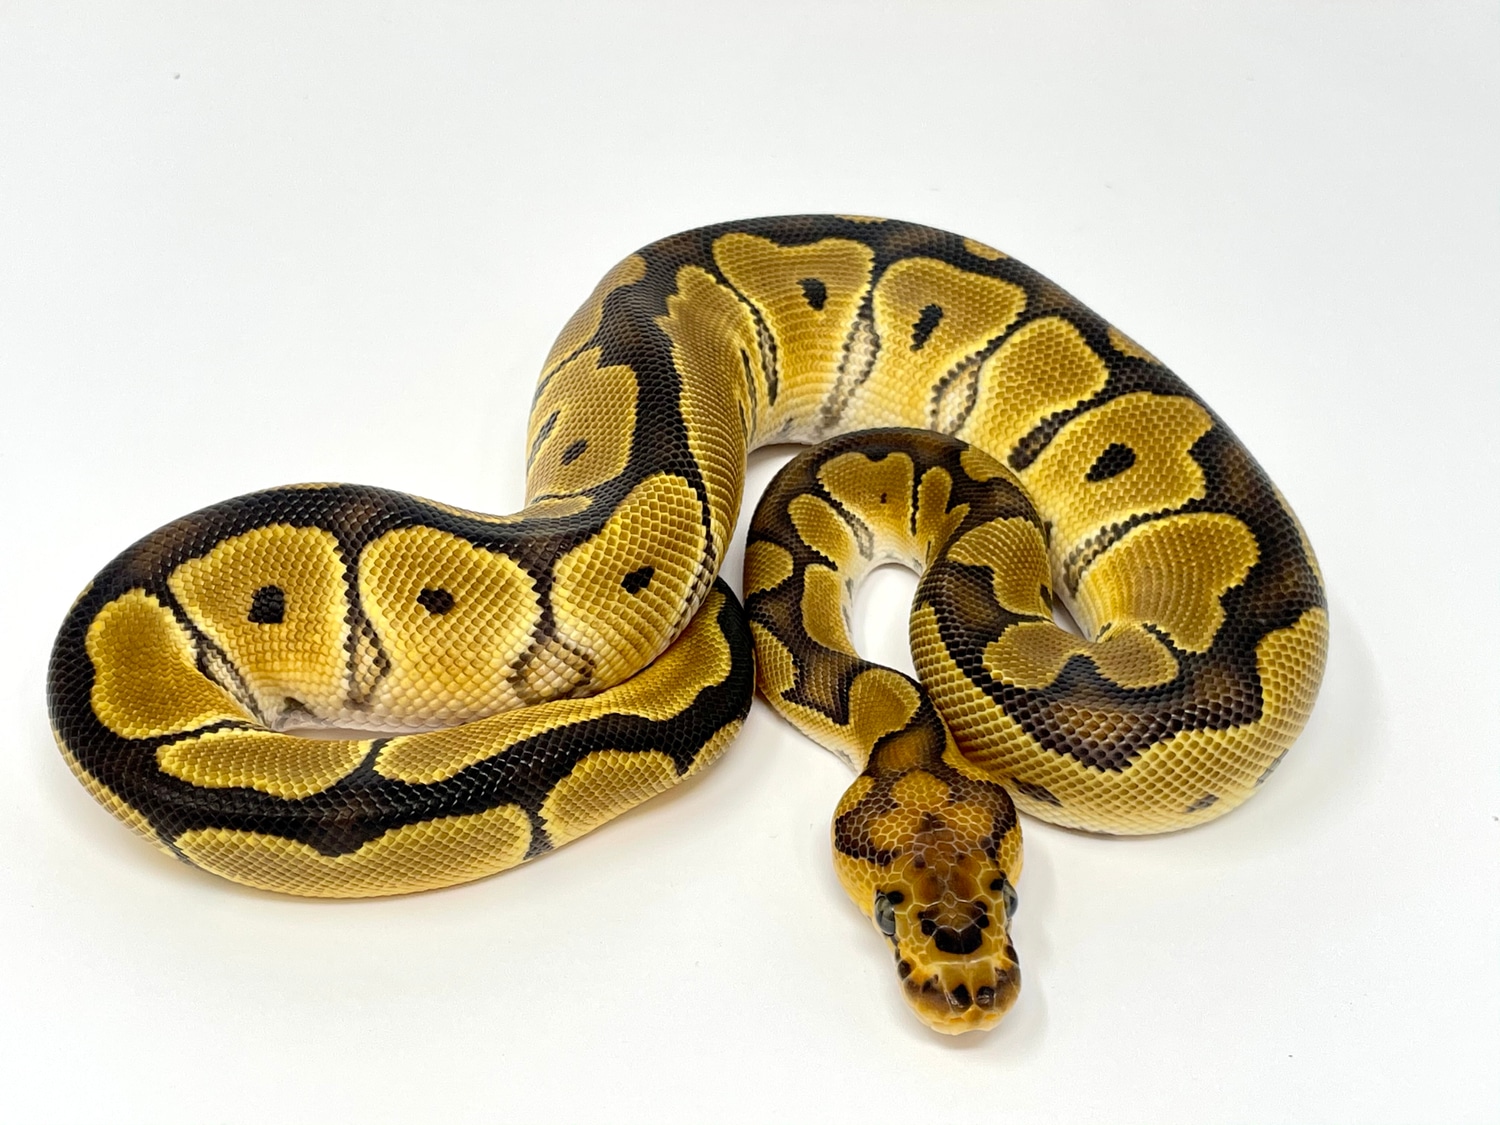 Nr Mandarin Clown Ball Python by Always Evolving Pythons